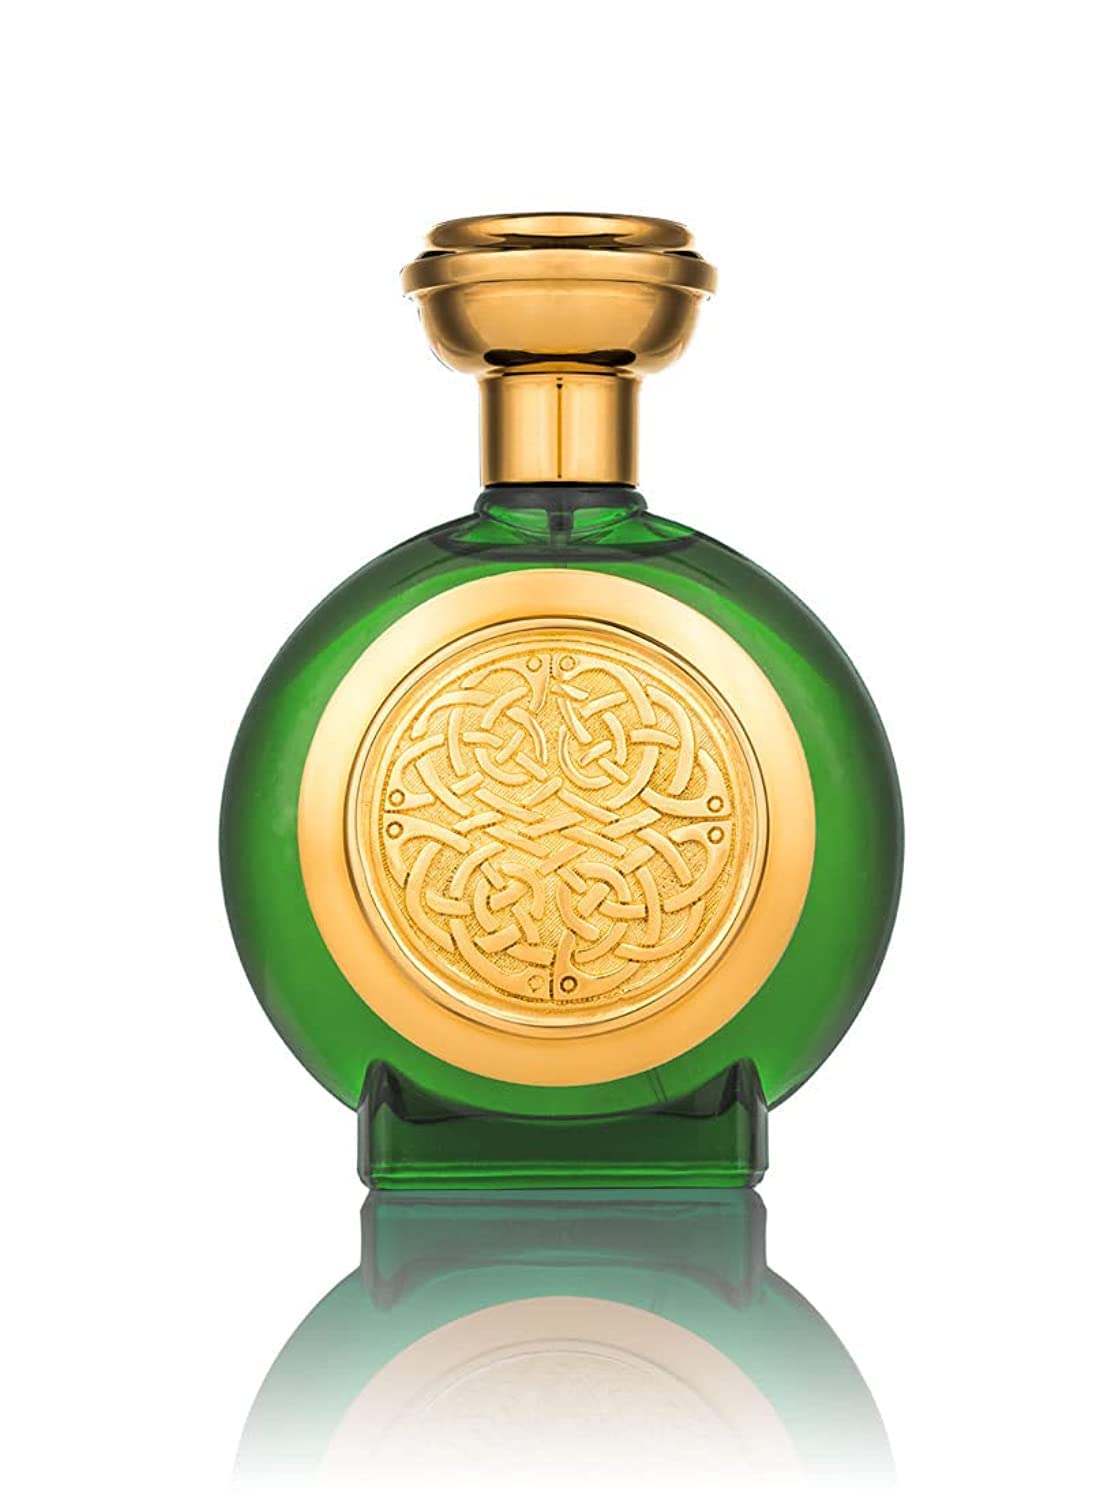 Boadicea The Victorious Complex 2020 Parfum.